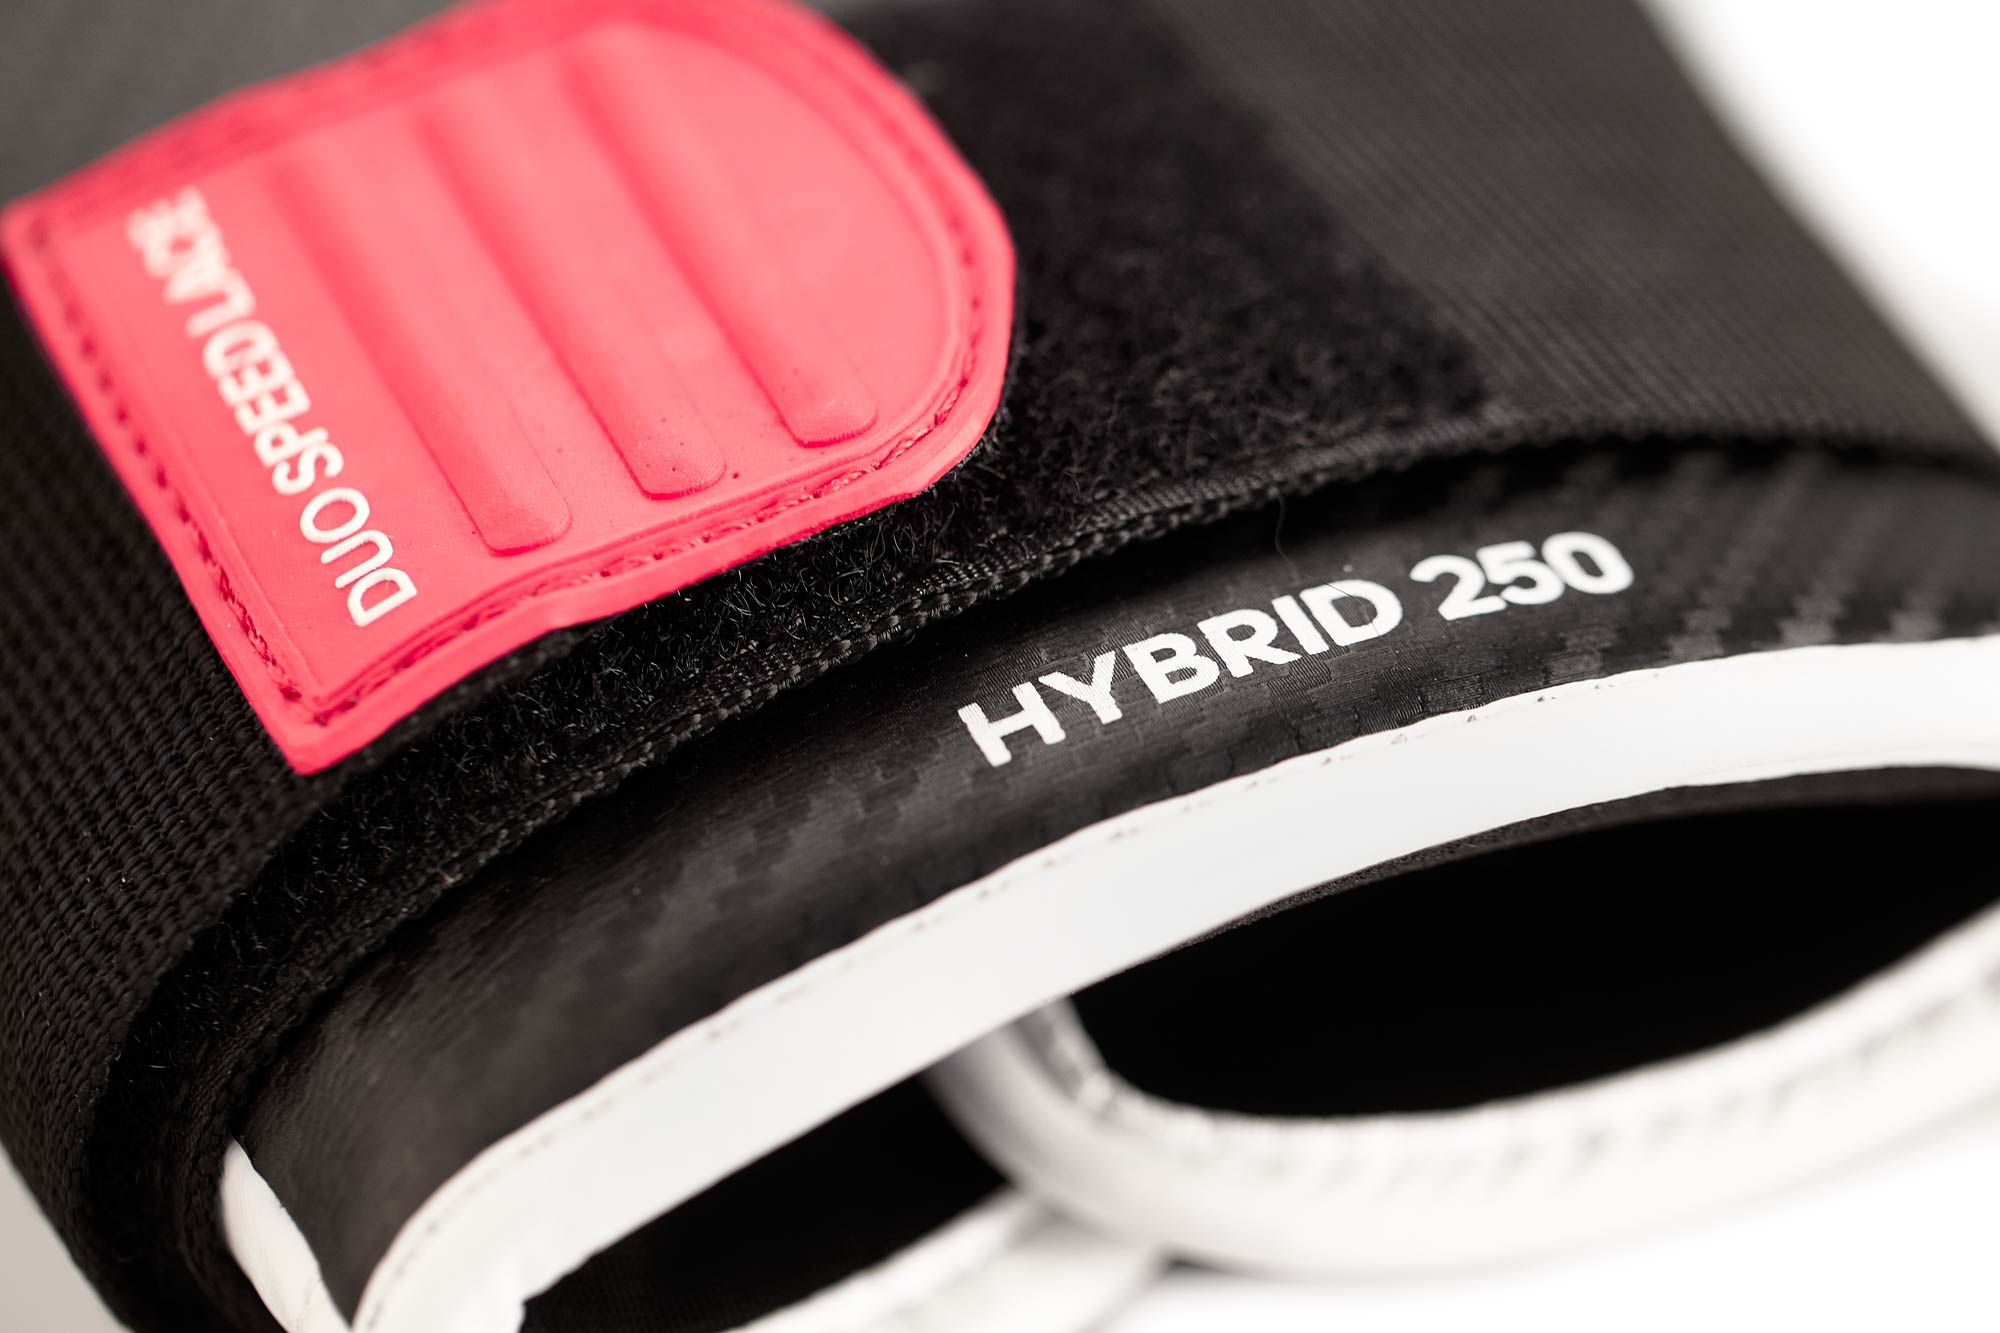 adidas boxing glove Hybrid 250 adiH250TG white/black